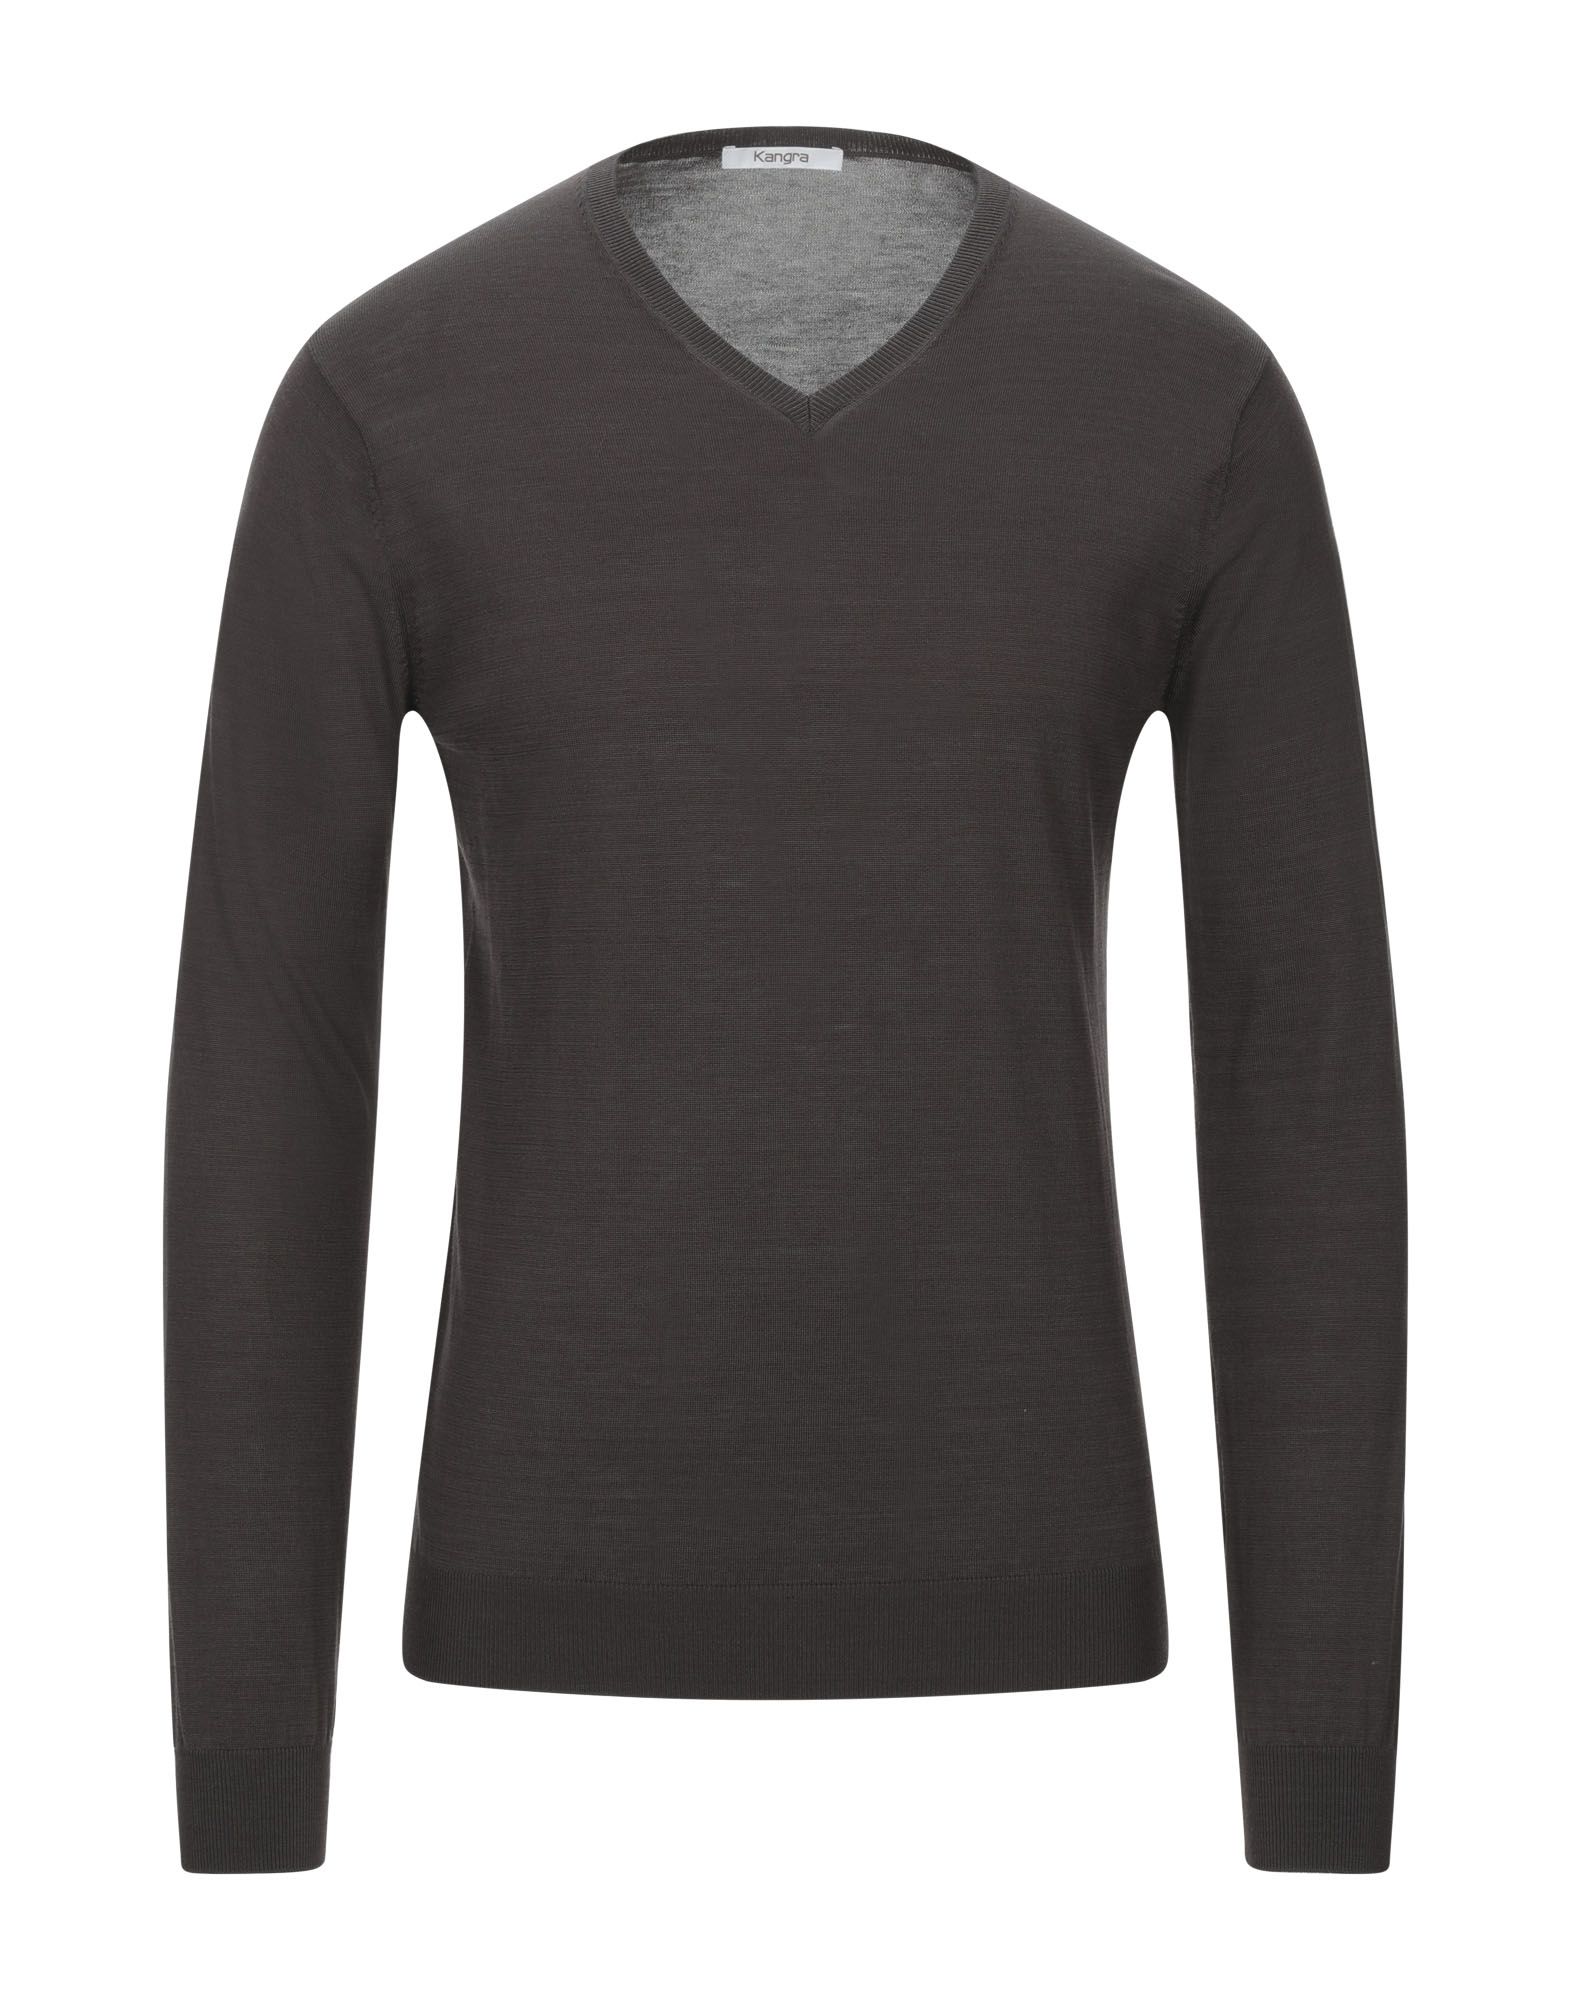 KANGRA CASHMERE Sweaters - Item 14010909